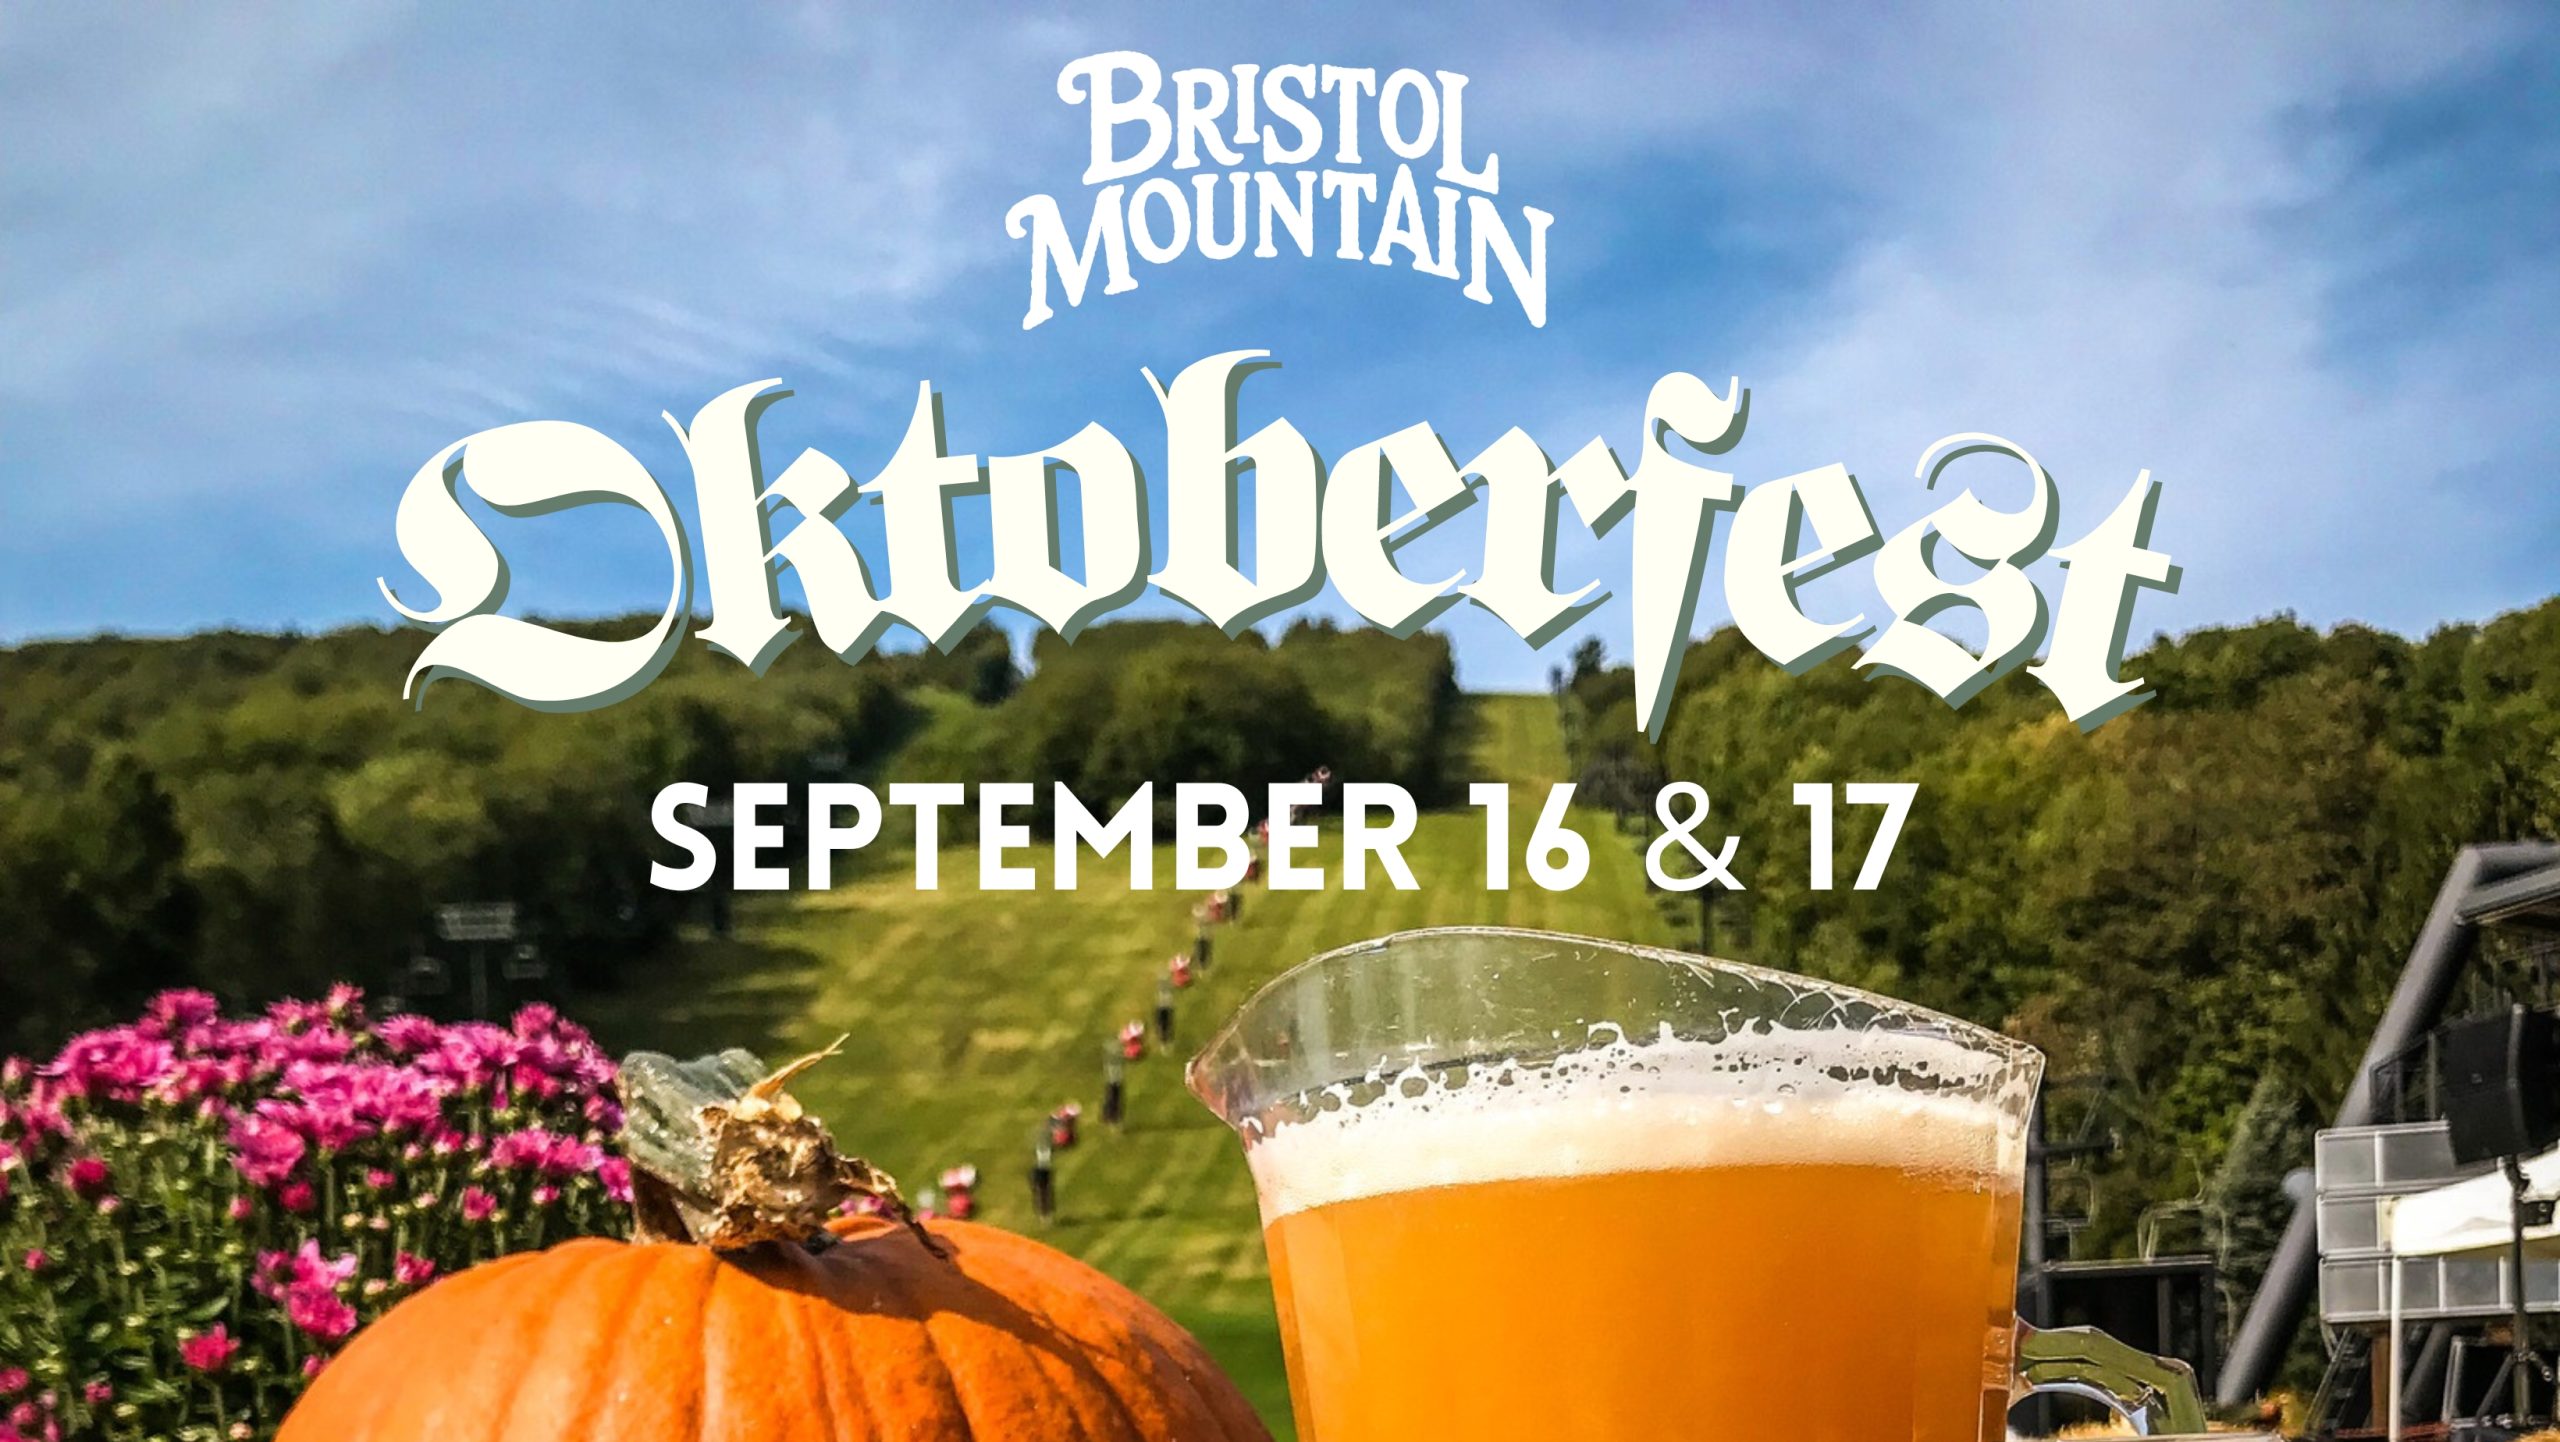 Bristol Mountain Oktoberfest, September 16 & 17